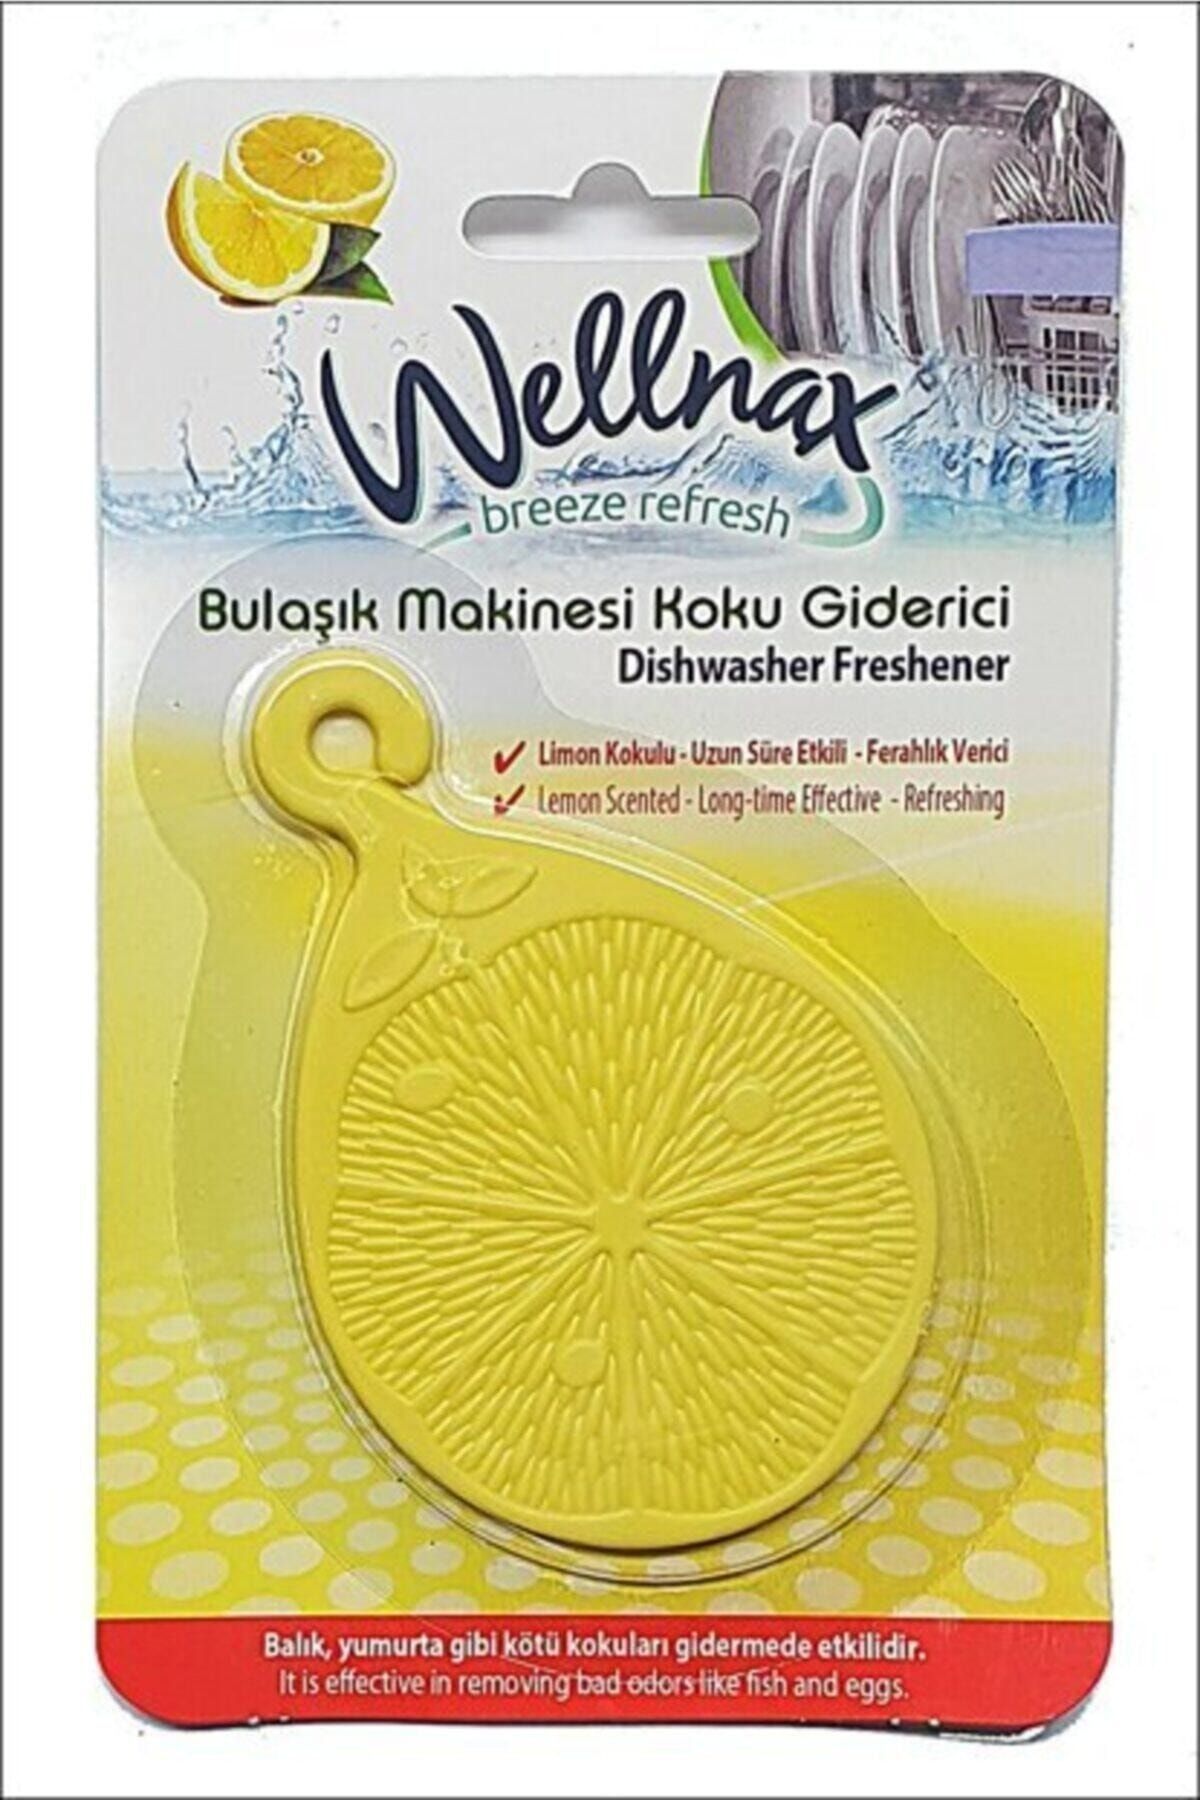 Wellnax breeze refresh Bulaşık Makinesi Koku Giderici
( Limon )